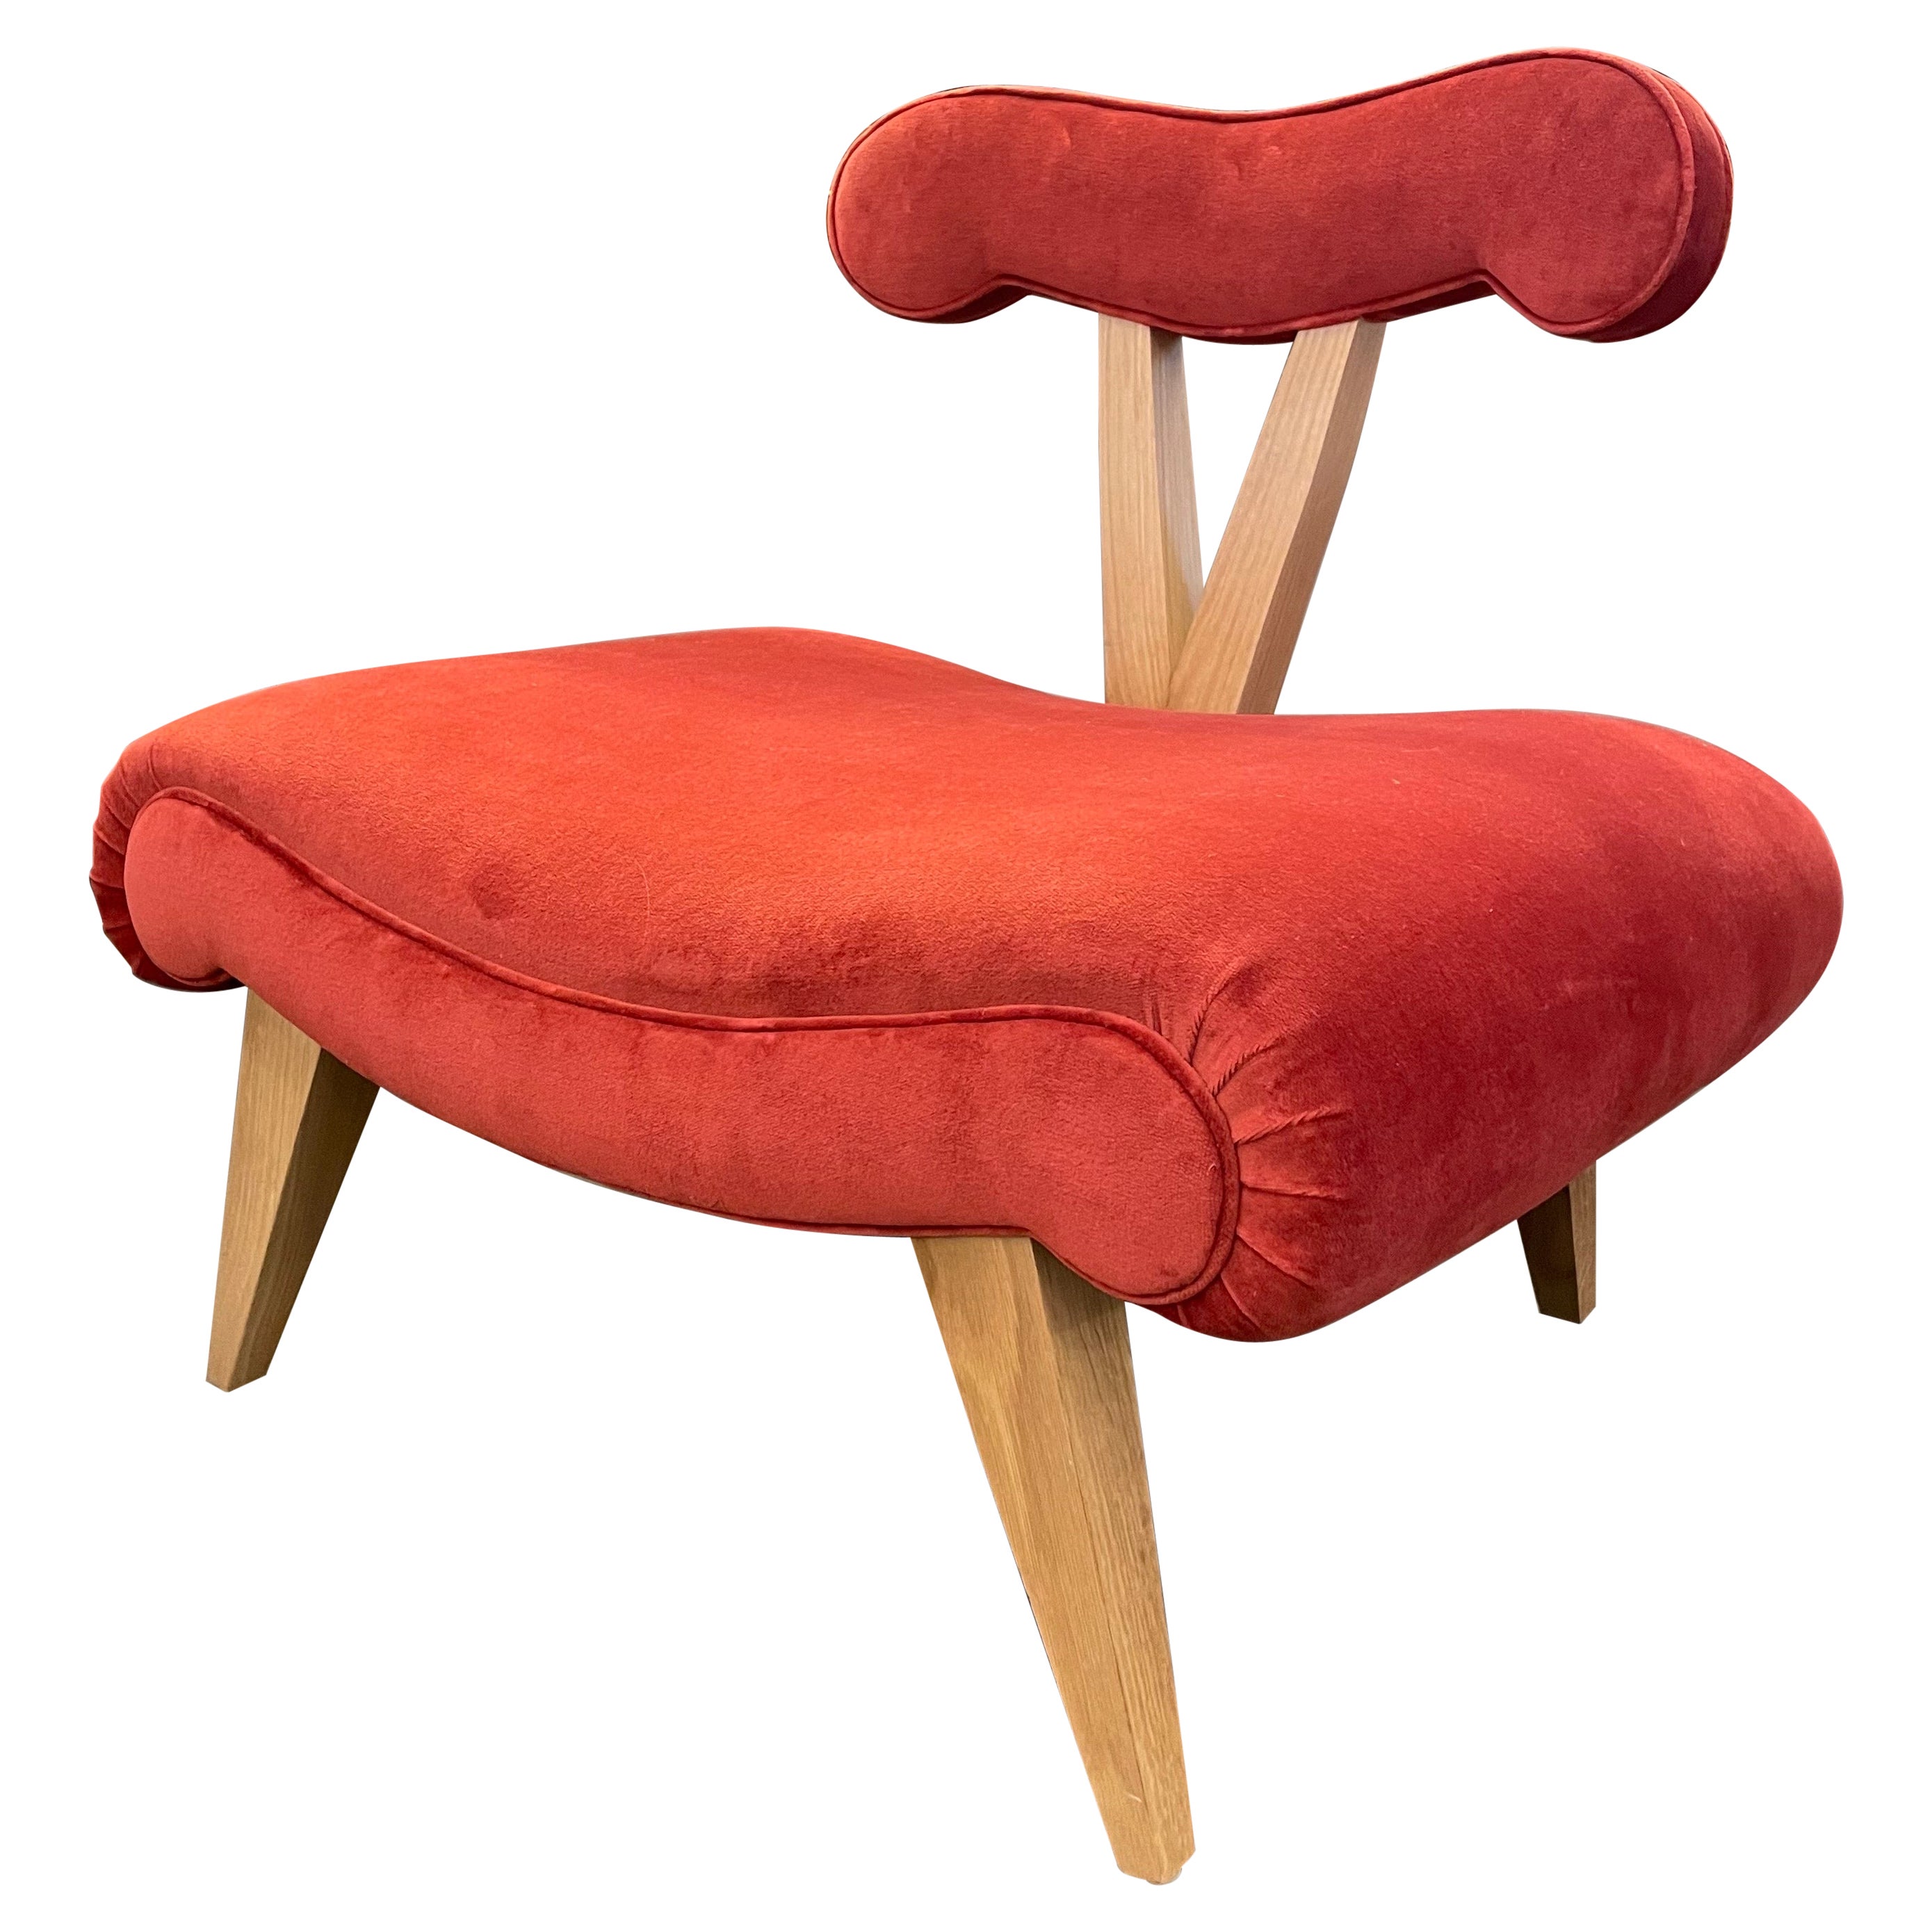 Grosfeld House Slipper Chair "Cranberry"